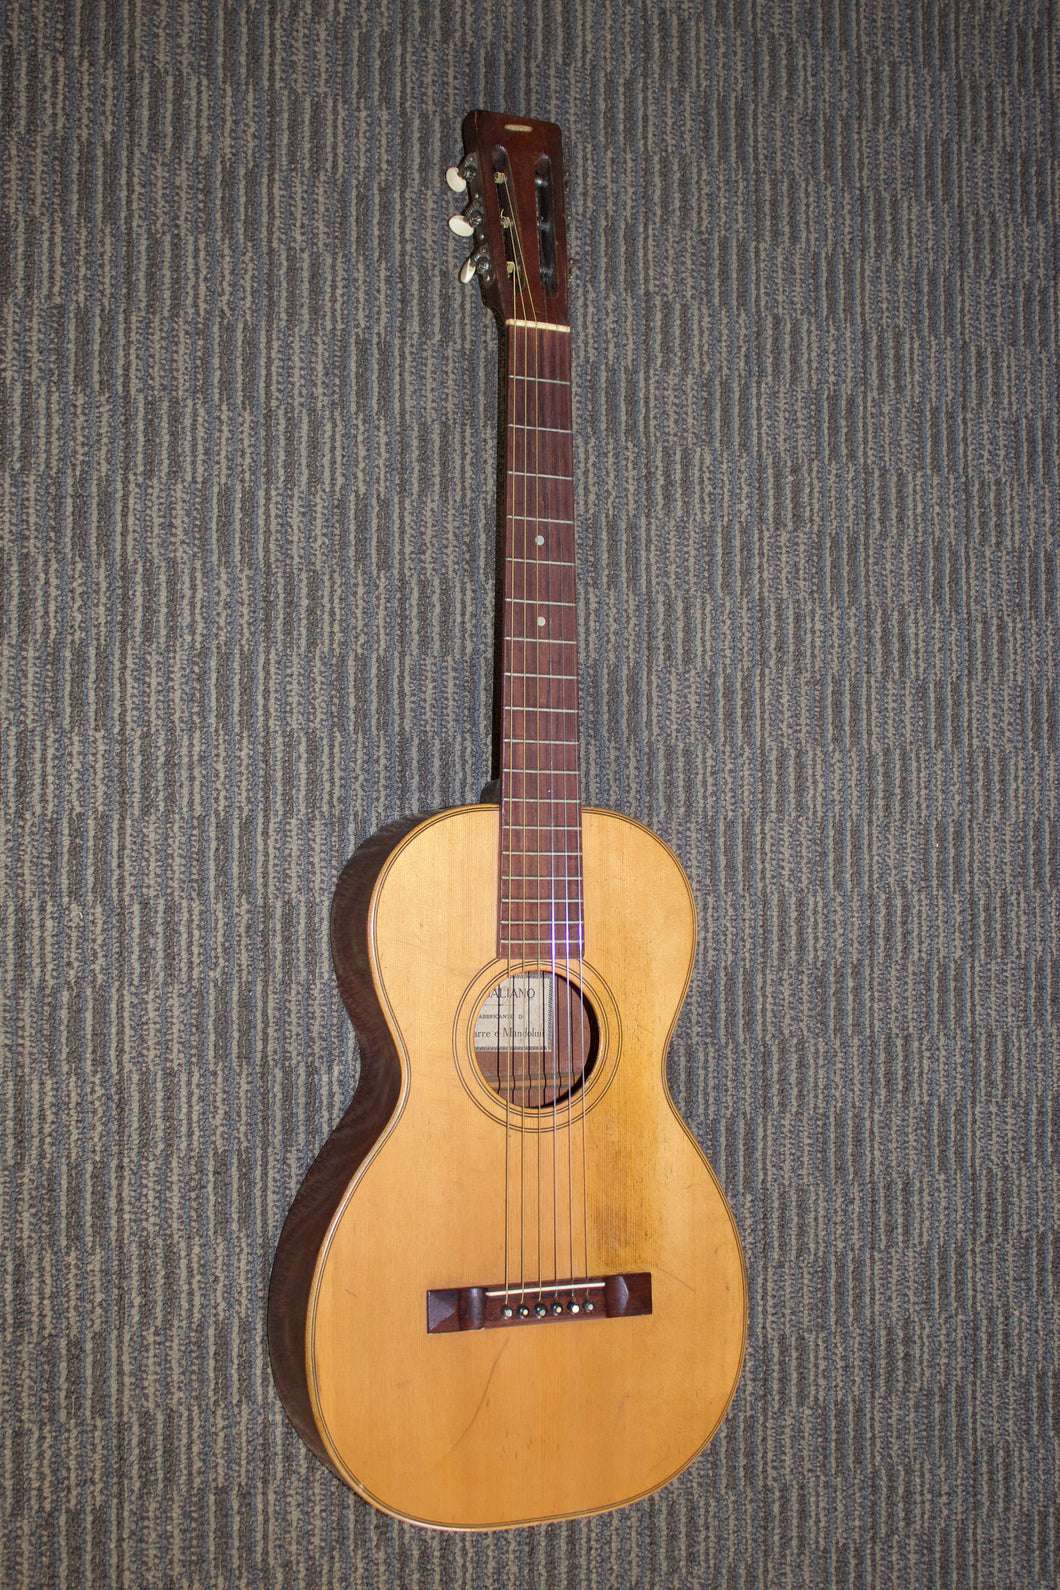 Galliano Parlor Guitar c. 1920s